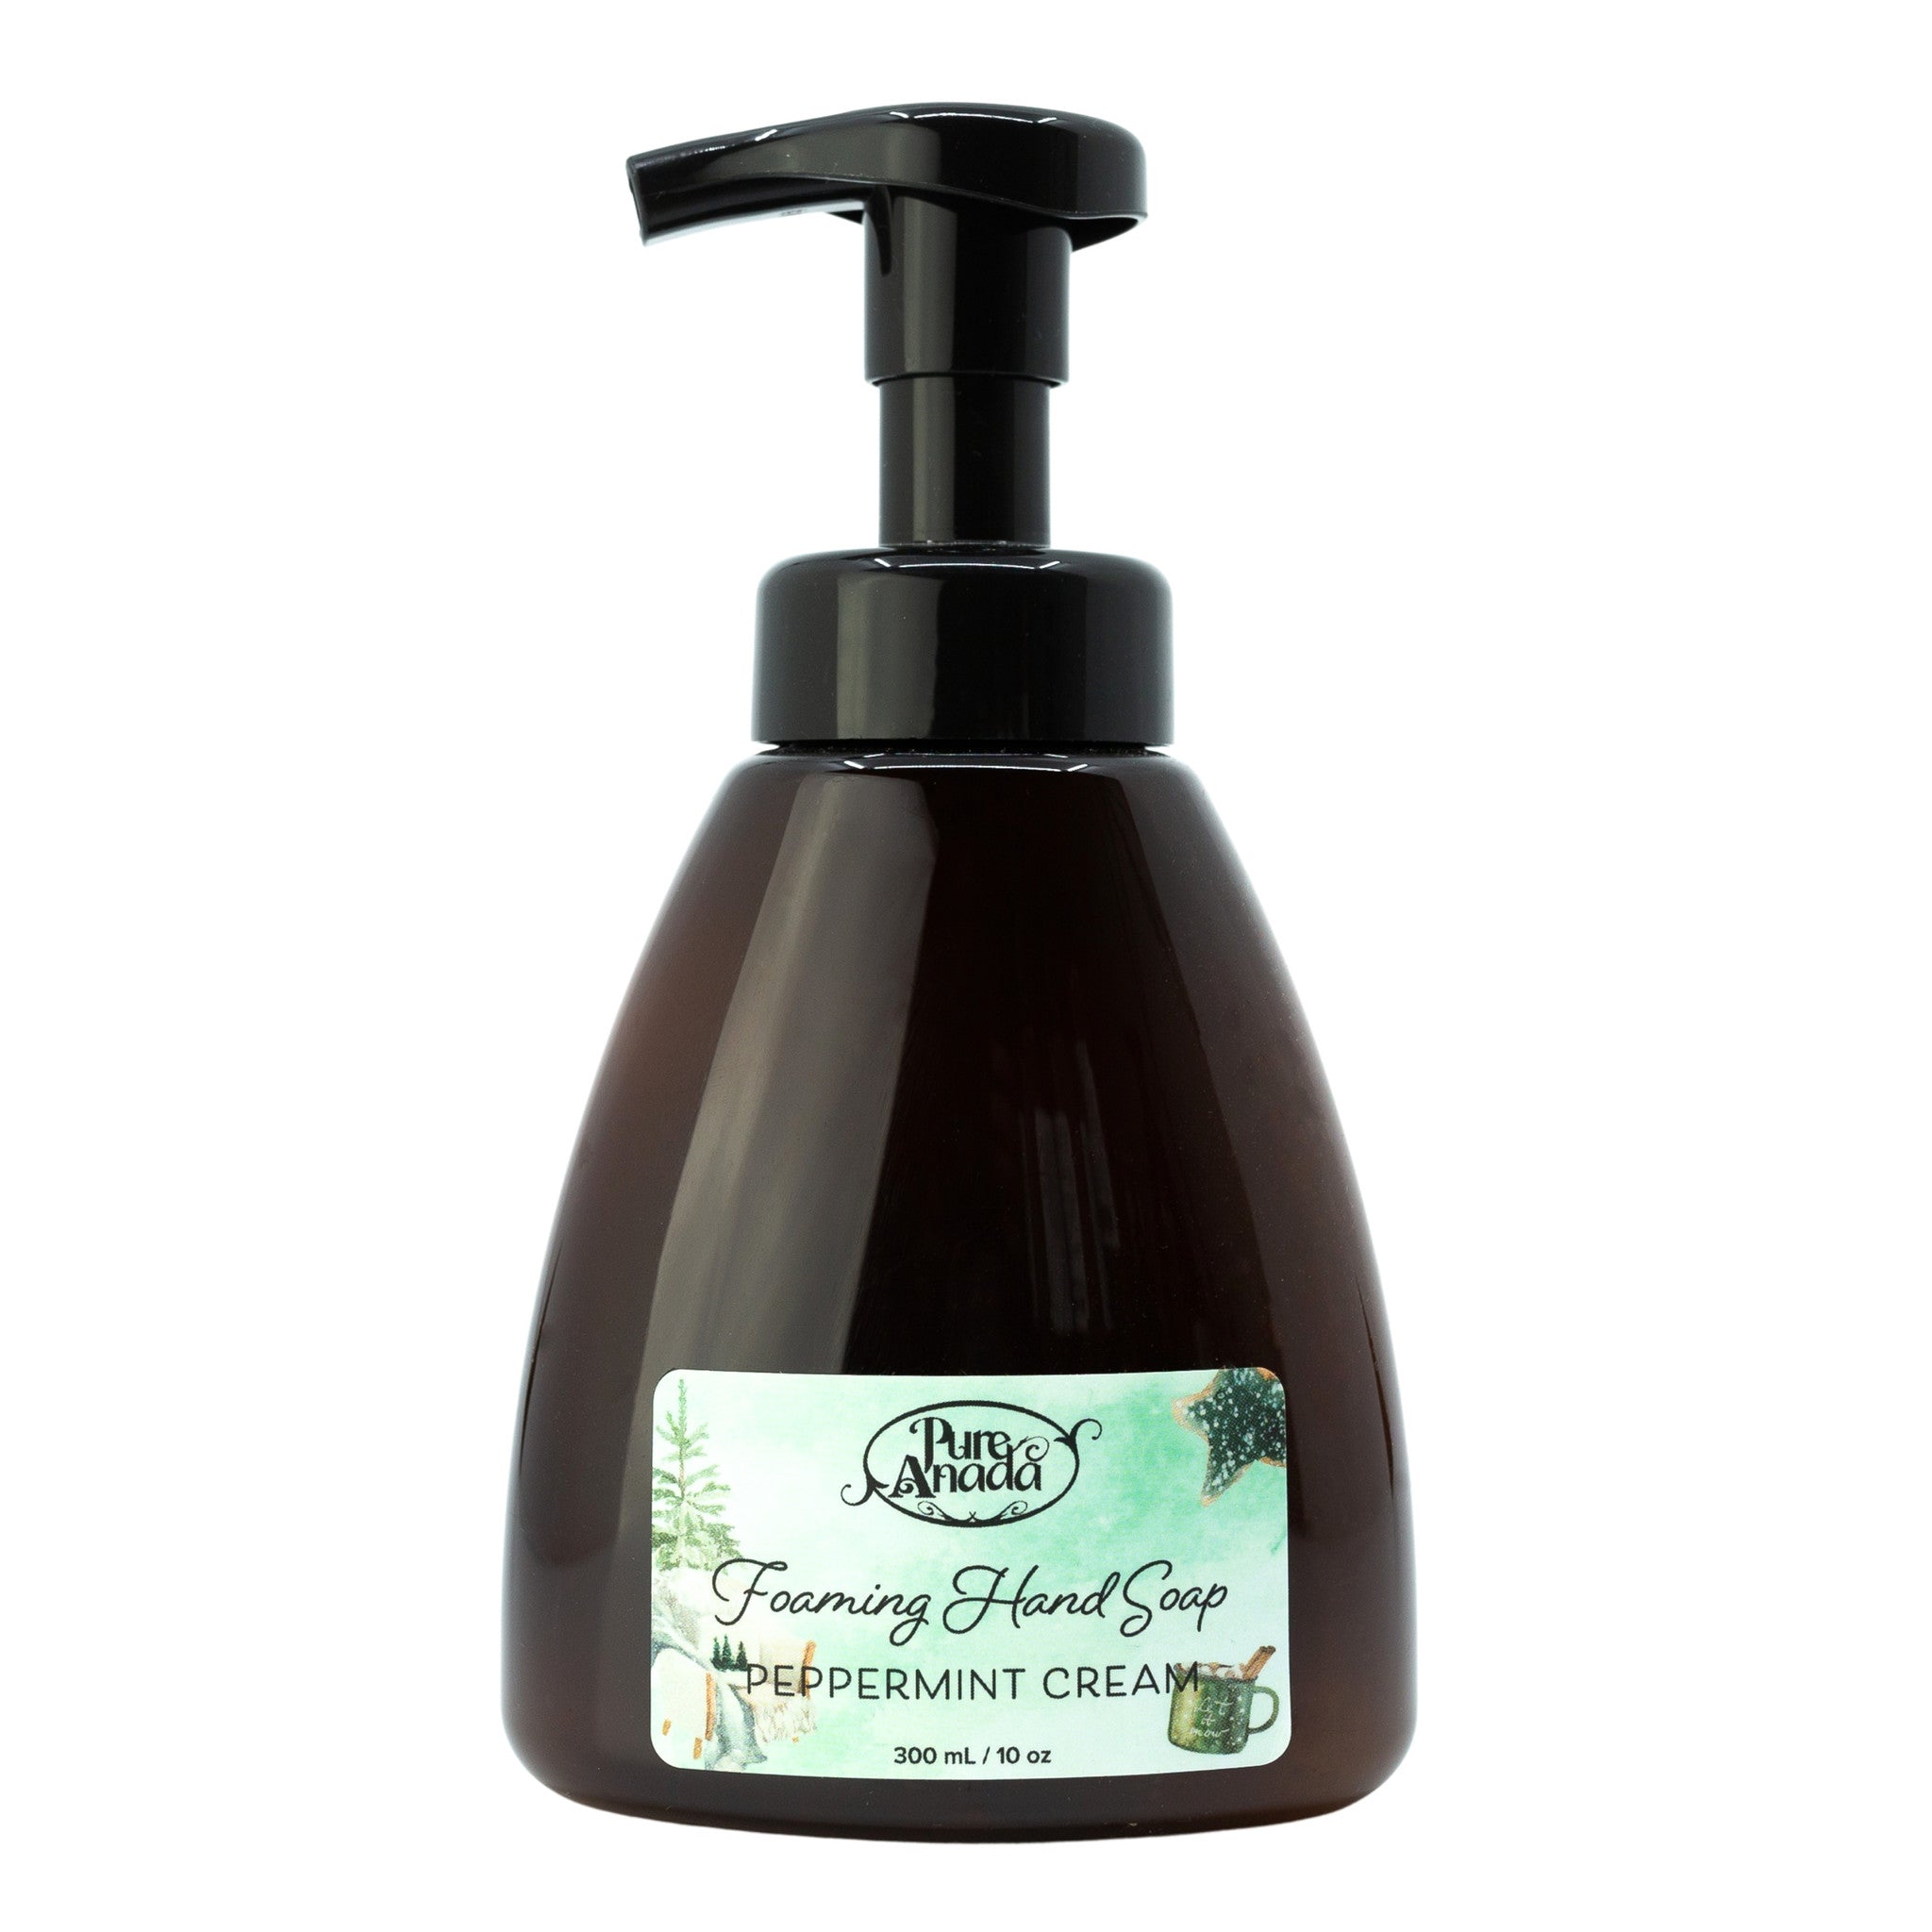 Pure Anada Peppermint Cream Foaming Hand Soap 300mL